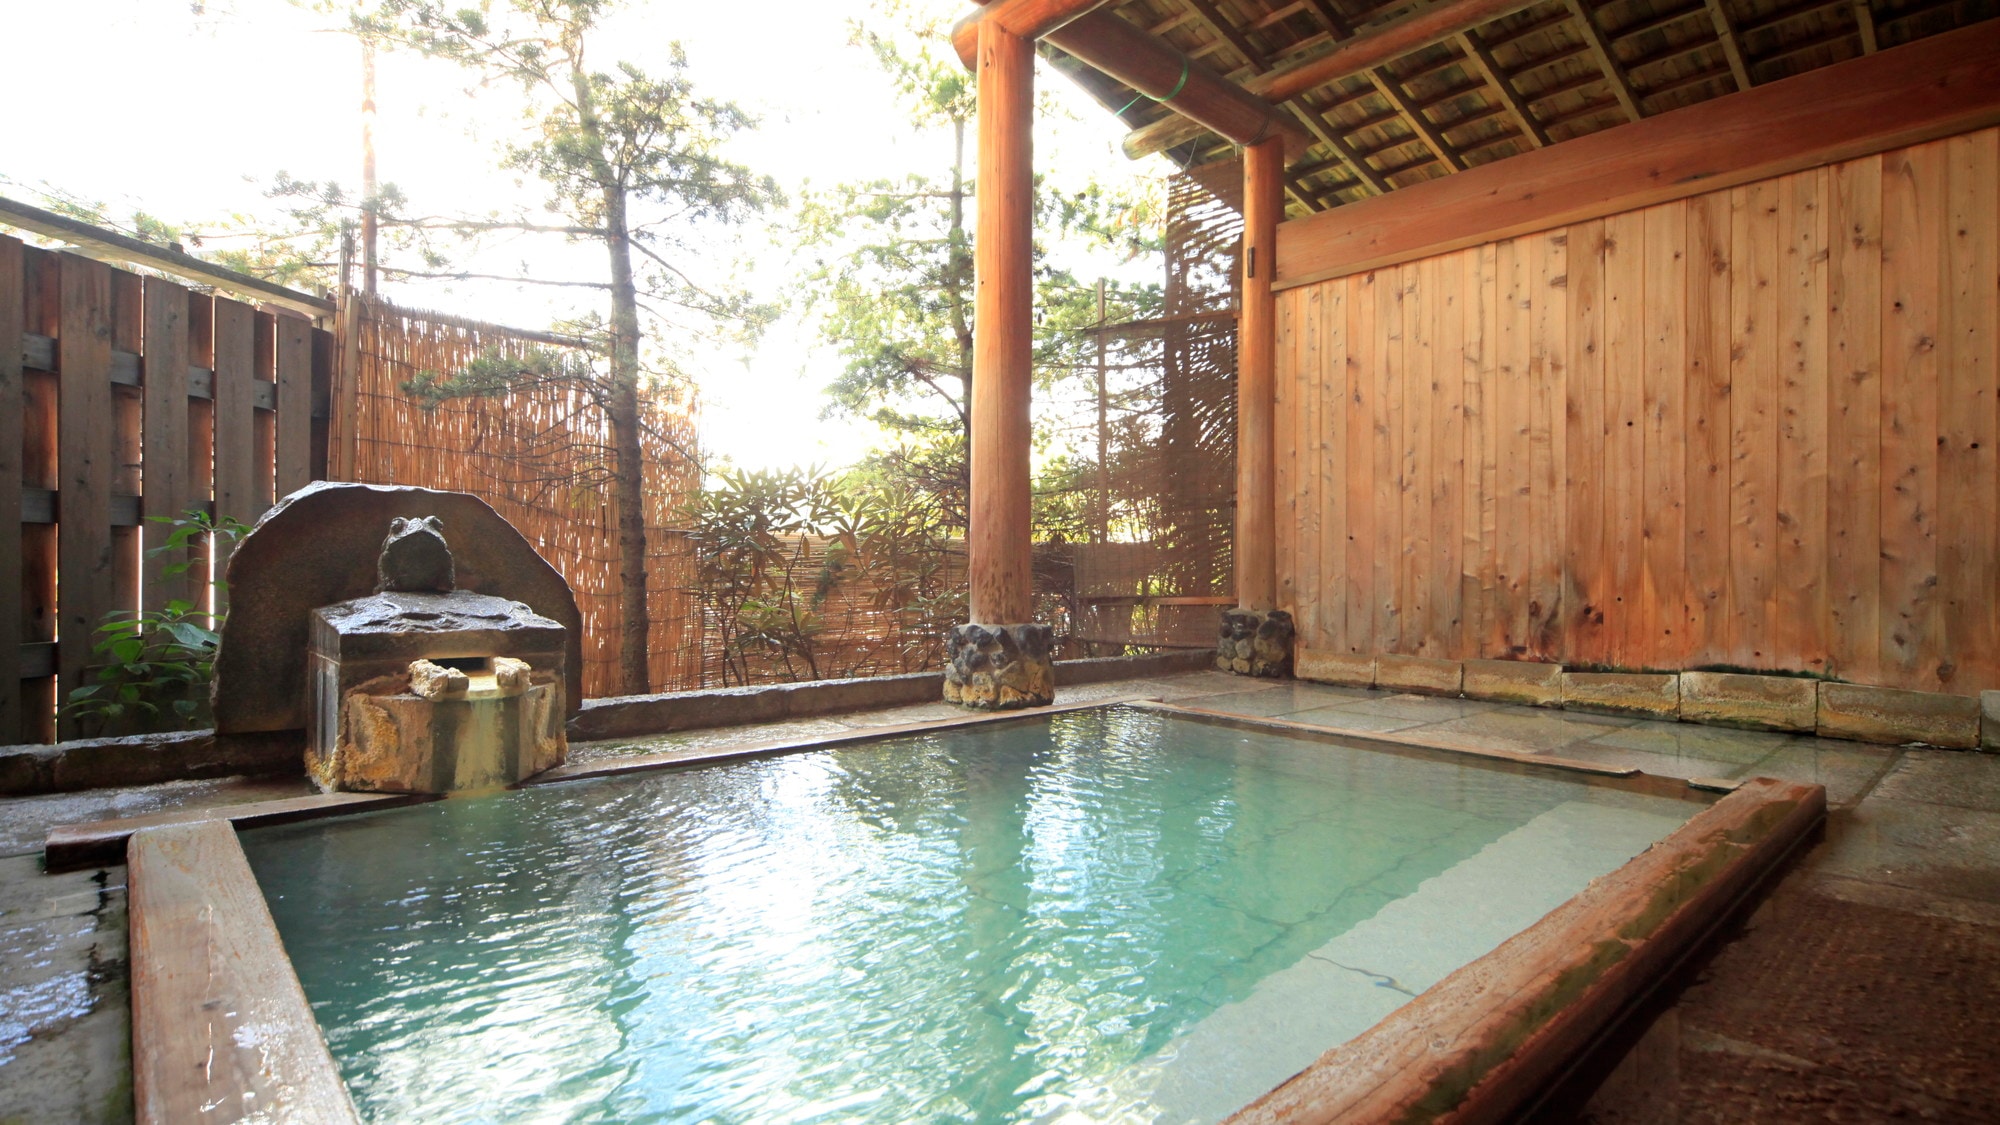 Open-air bath for women. Please enjoy the famous hot spring "Shirahata no Yu" slowly.